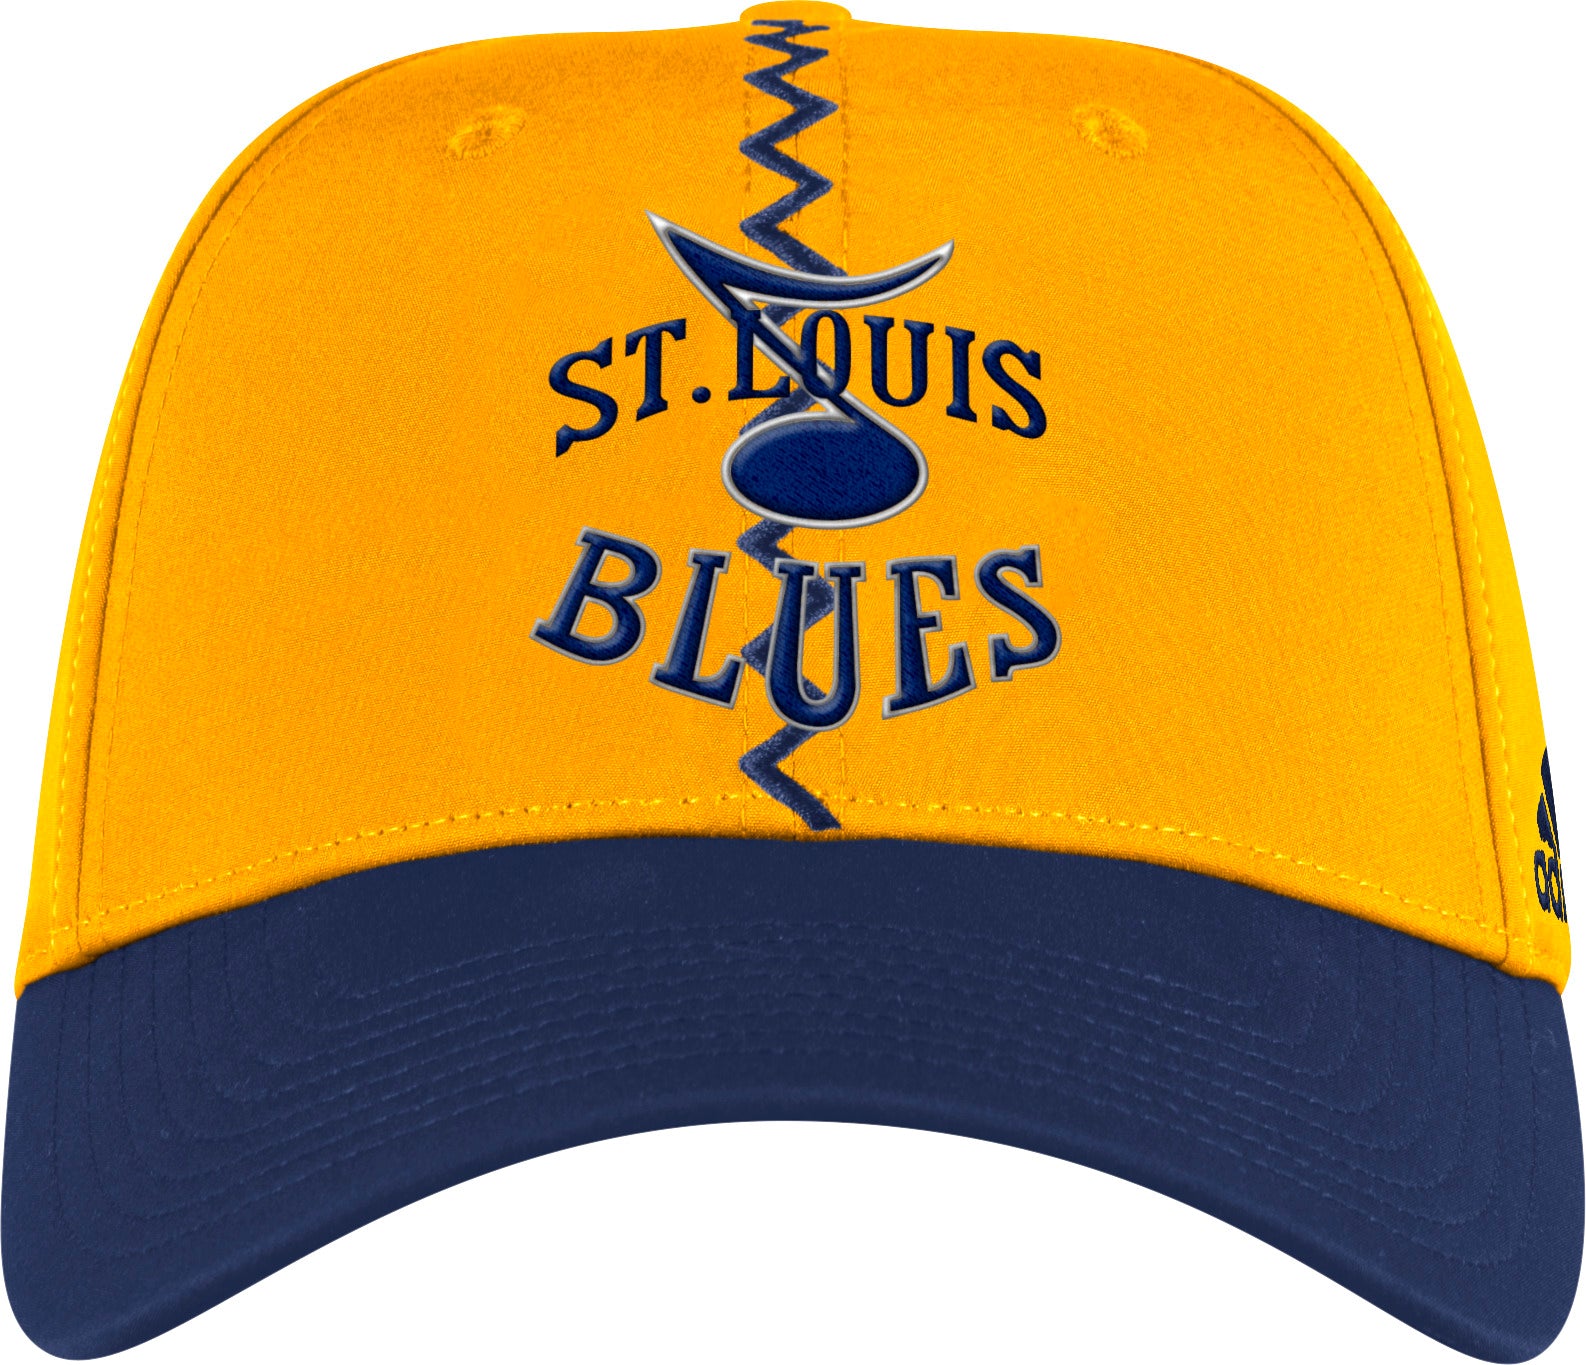 St. Louis Blues Adidas Performance Locker Room Coach Flex Hat – Gold